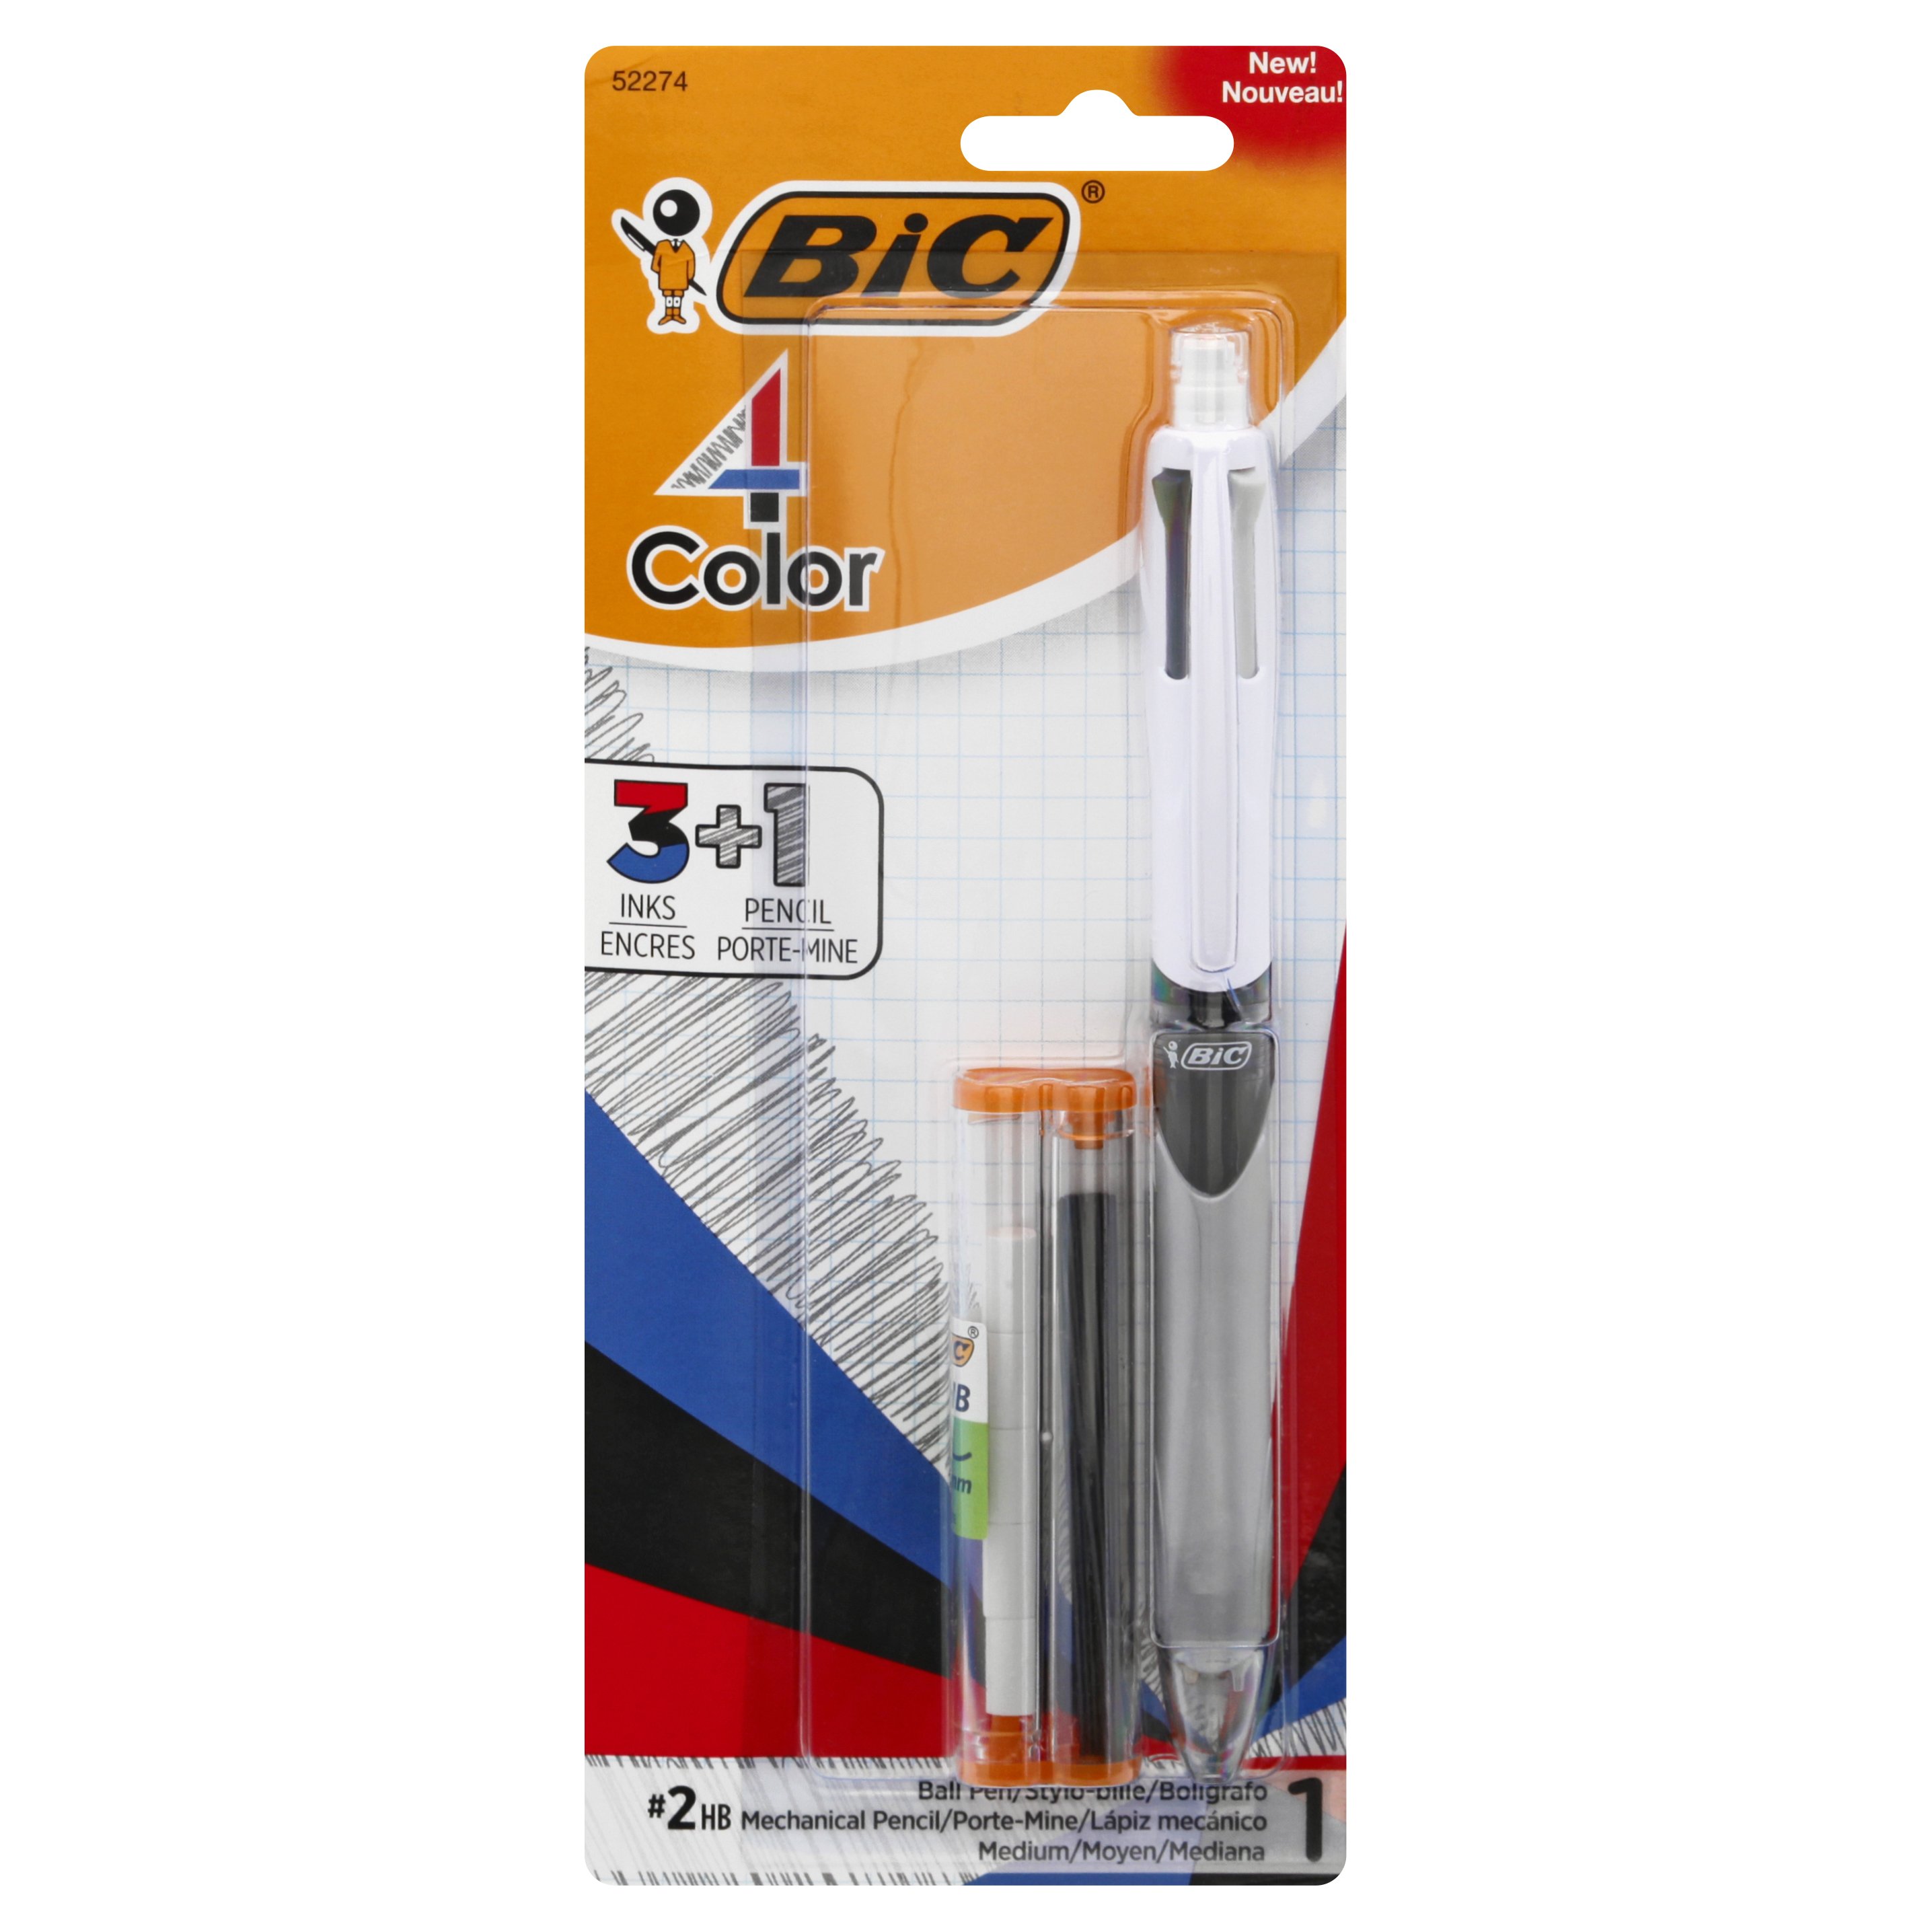 Bic 4 Color 3+1 & Pencil - School & Office Supplies at